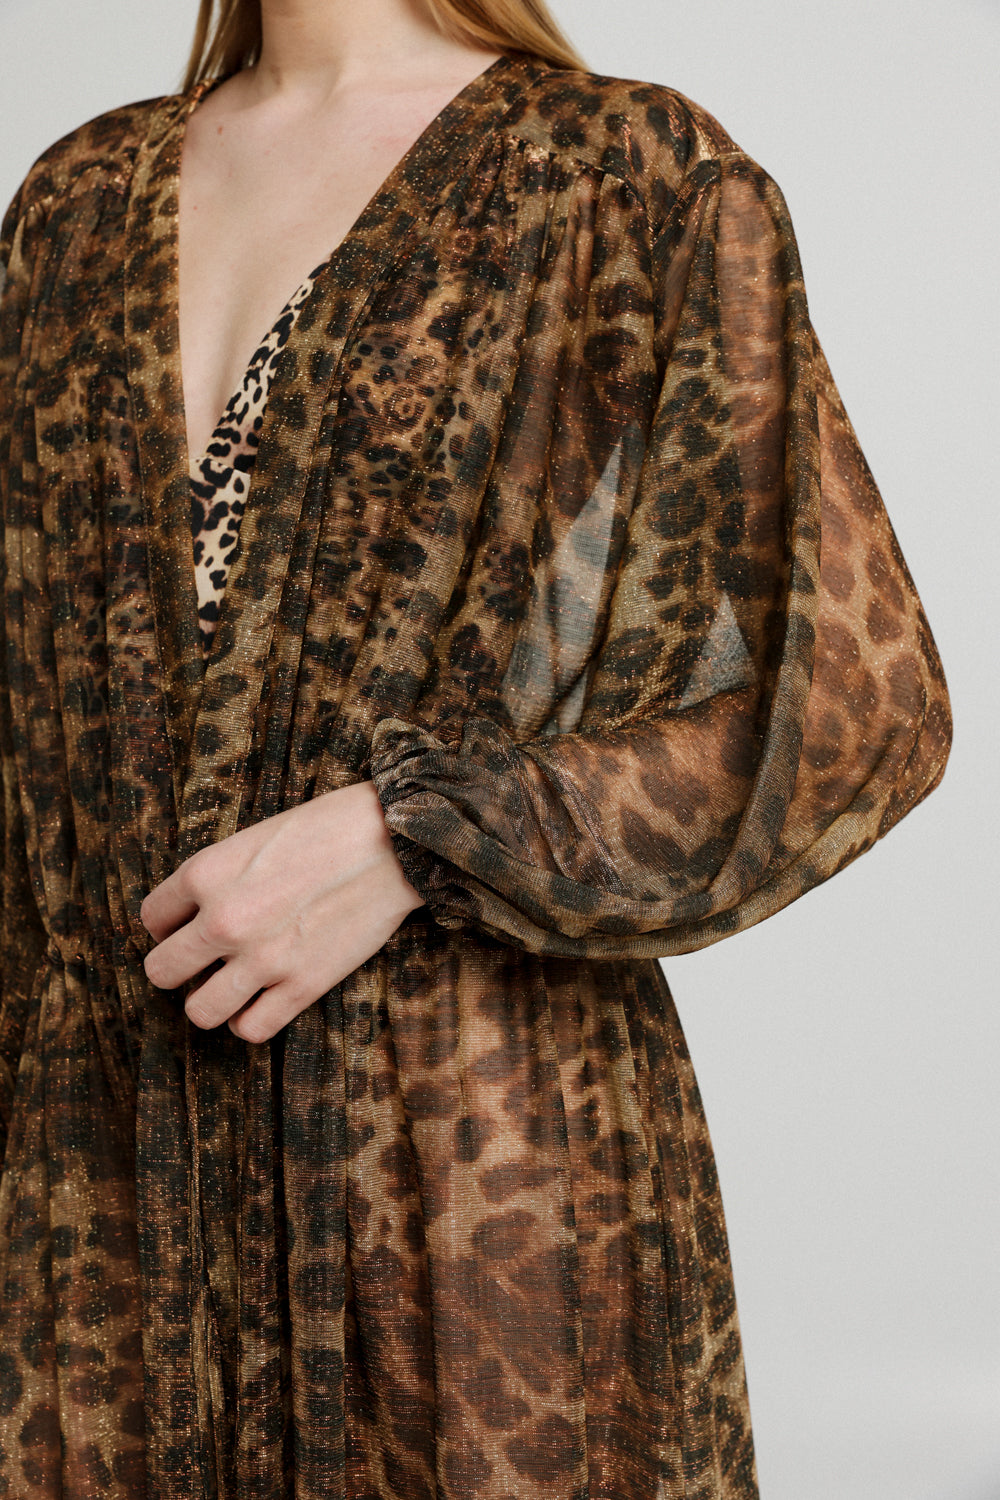 Hillside Sparkly Leopard Kimono